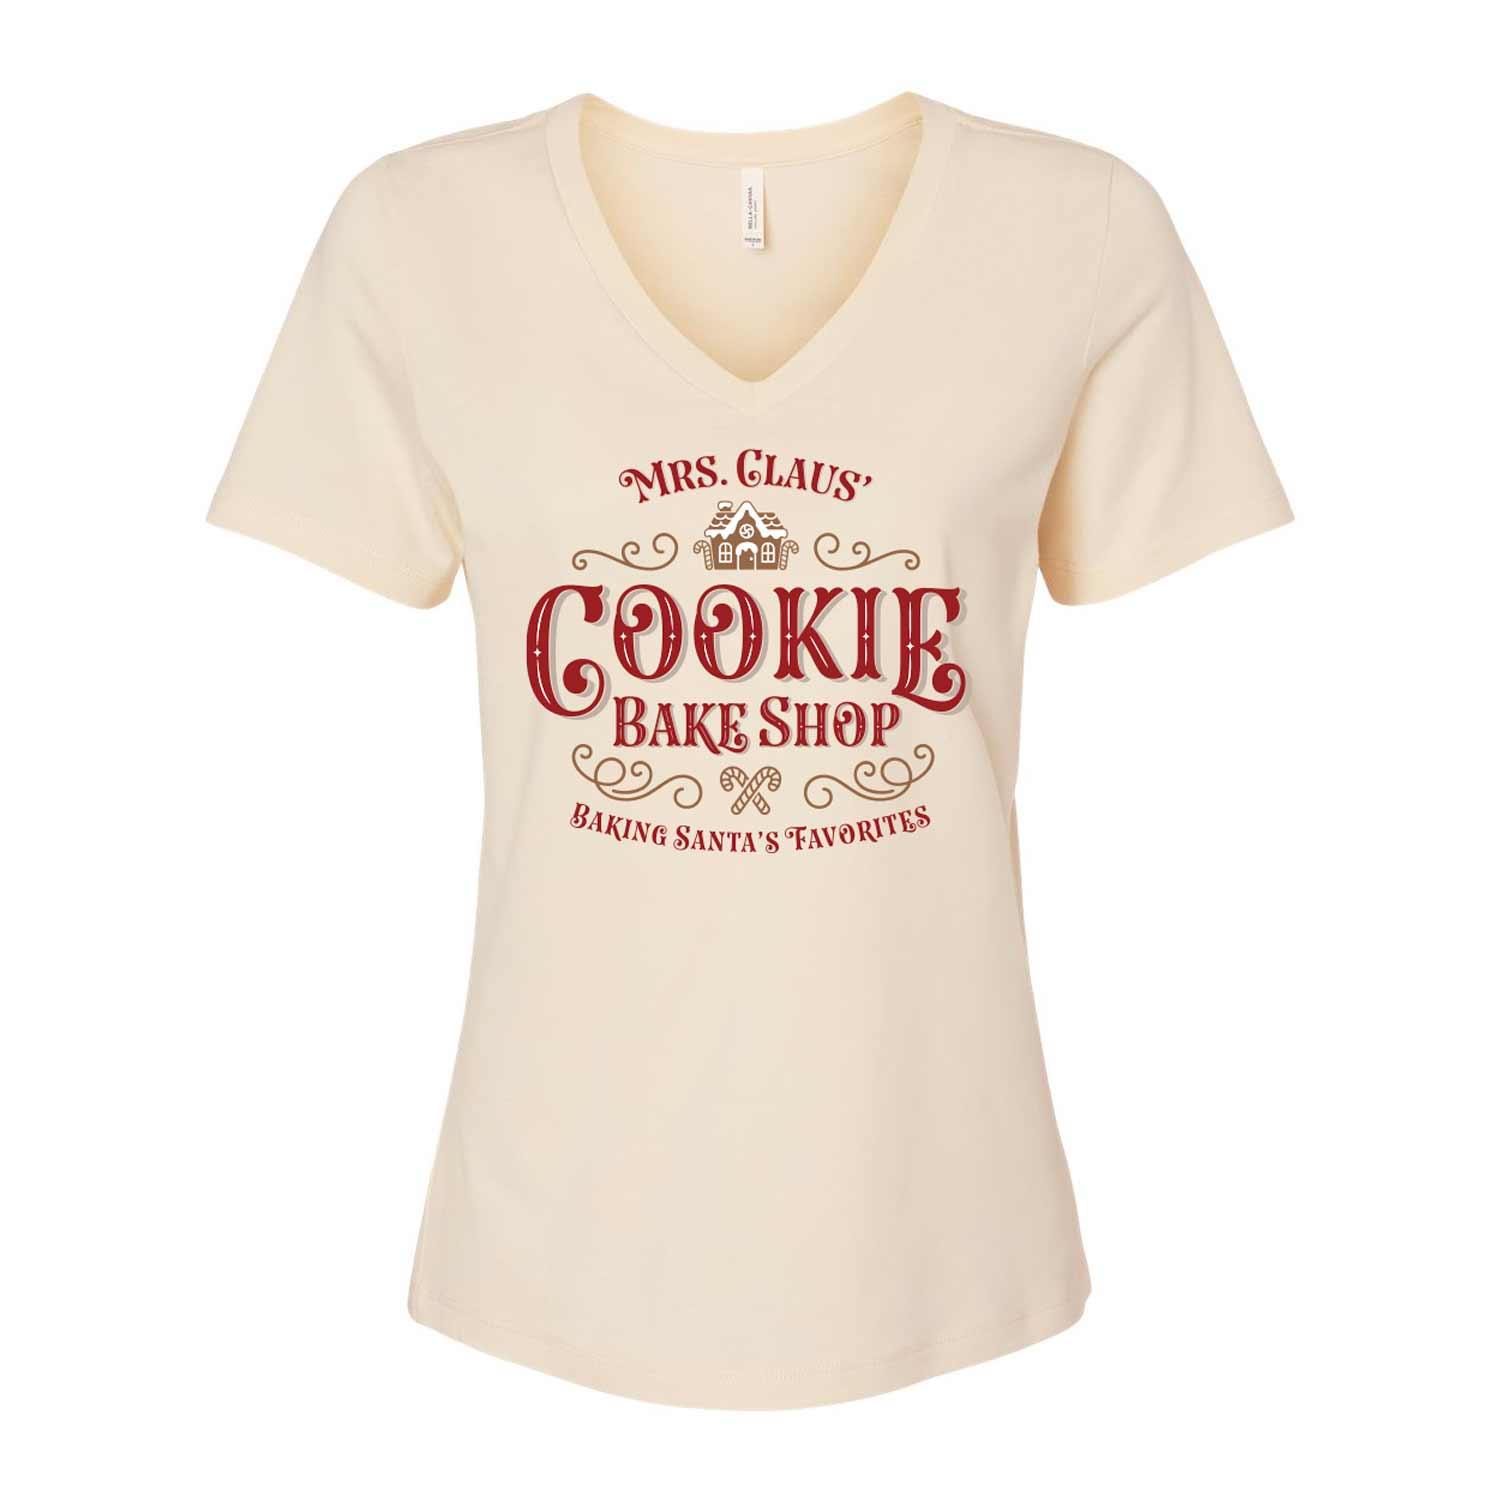 Mrs. Claus' Cookie Bake Shop Ladies V-Neck T-Shirt